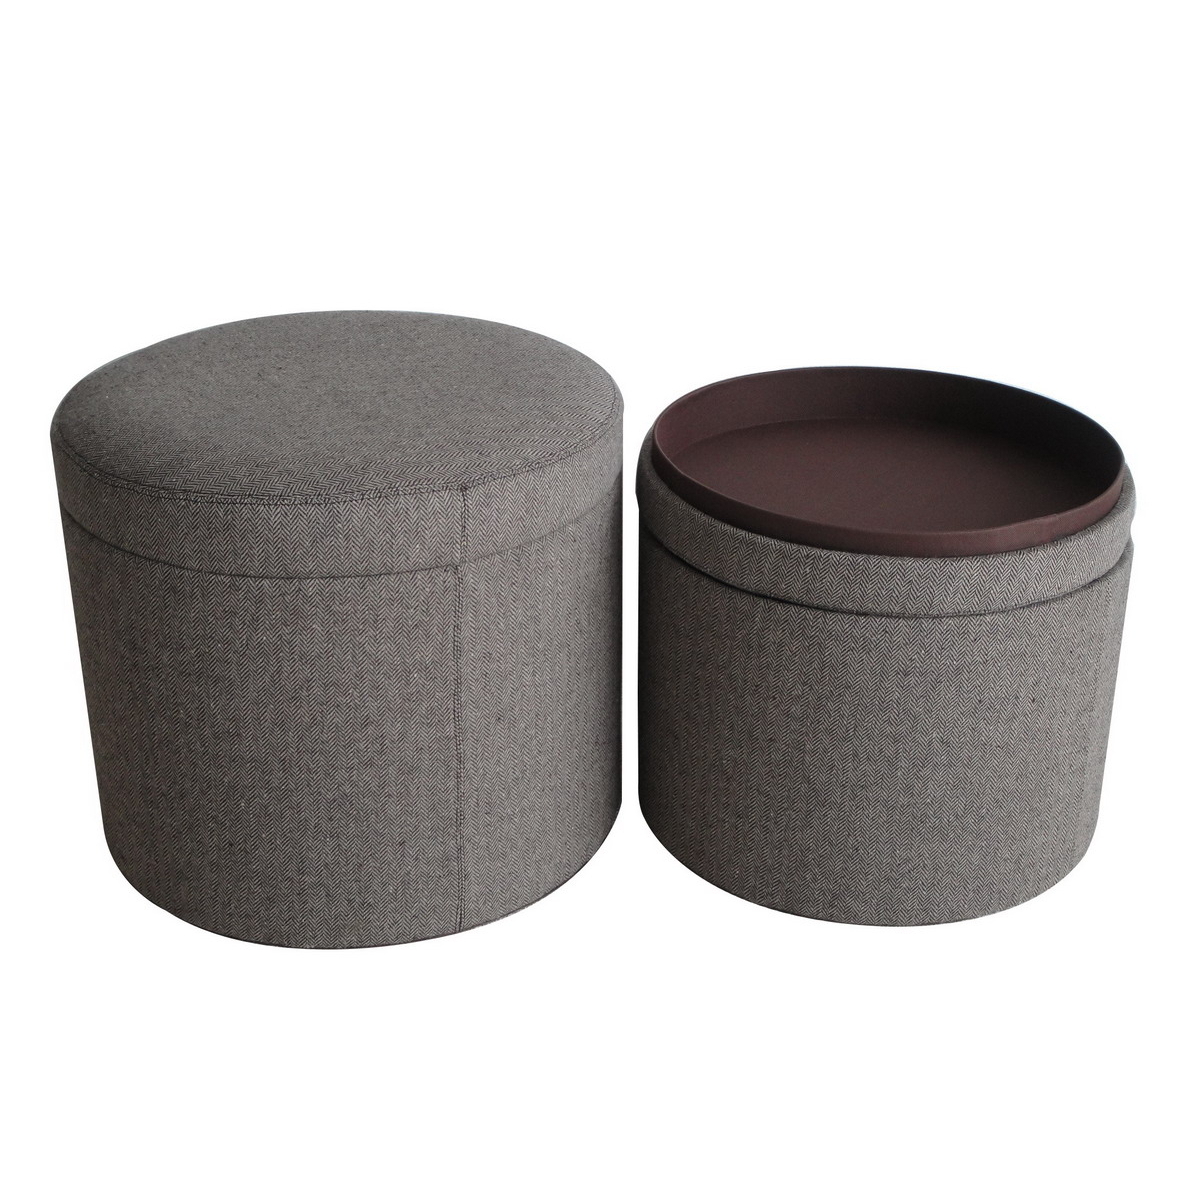 Round Storage Ottoman With Textured Fabric Upholstery, Gray- Saltoro Sherpi